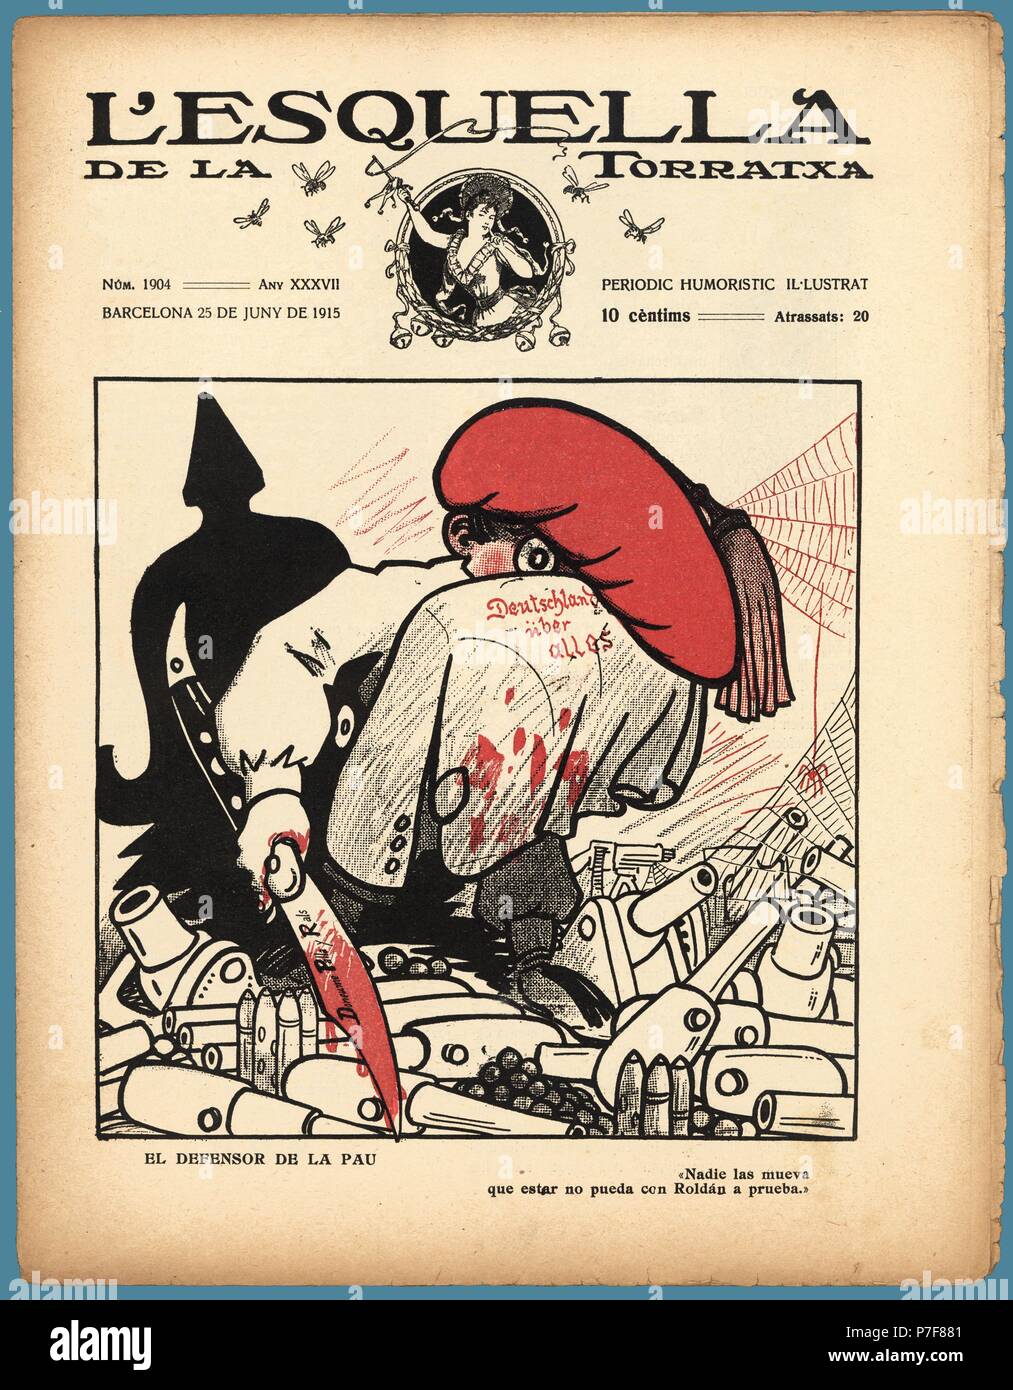 Portada de la revista satírica La Esquella de la Torratxa, editada en Barcelona, junio de 1915. Stock Photo